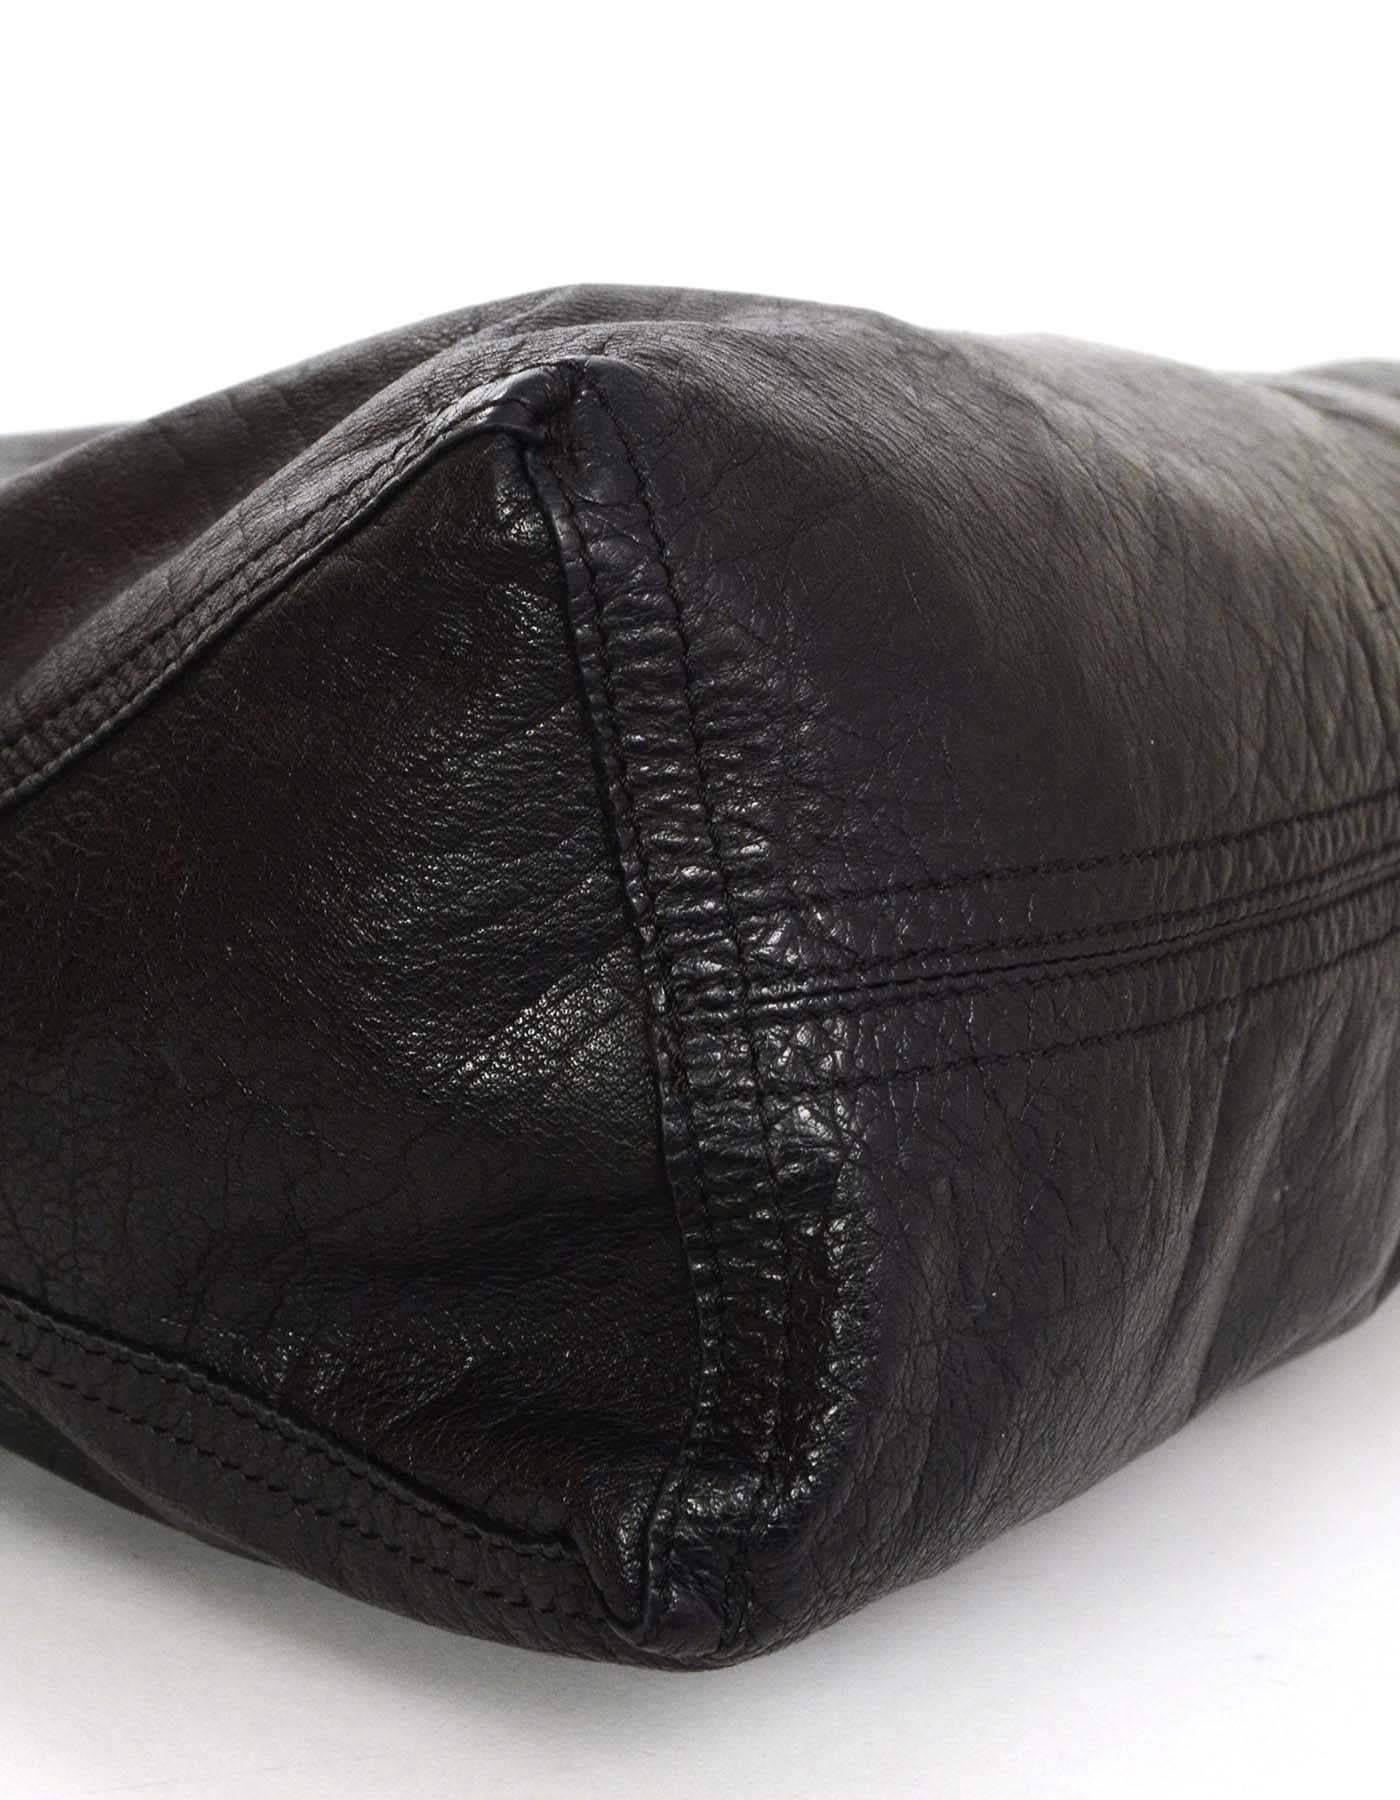 Rick Owens Black Distressed Leather Tote Bag GHW 1